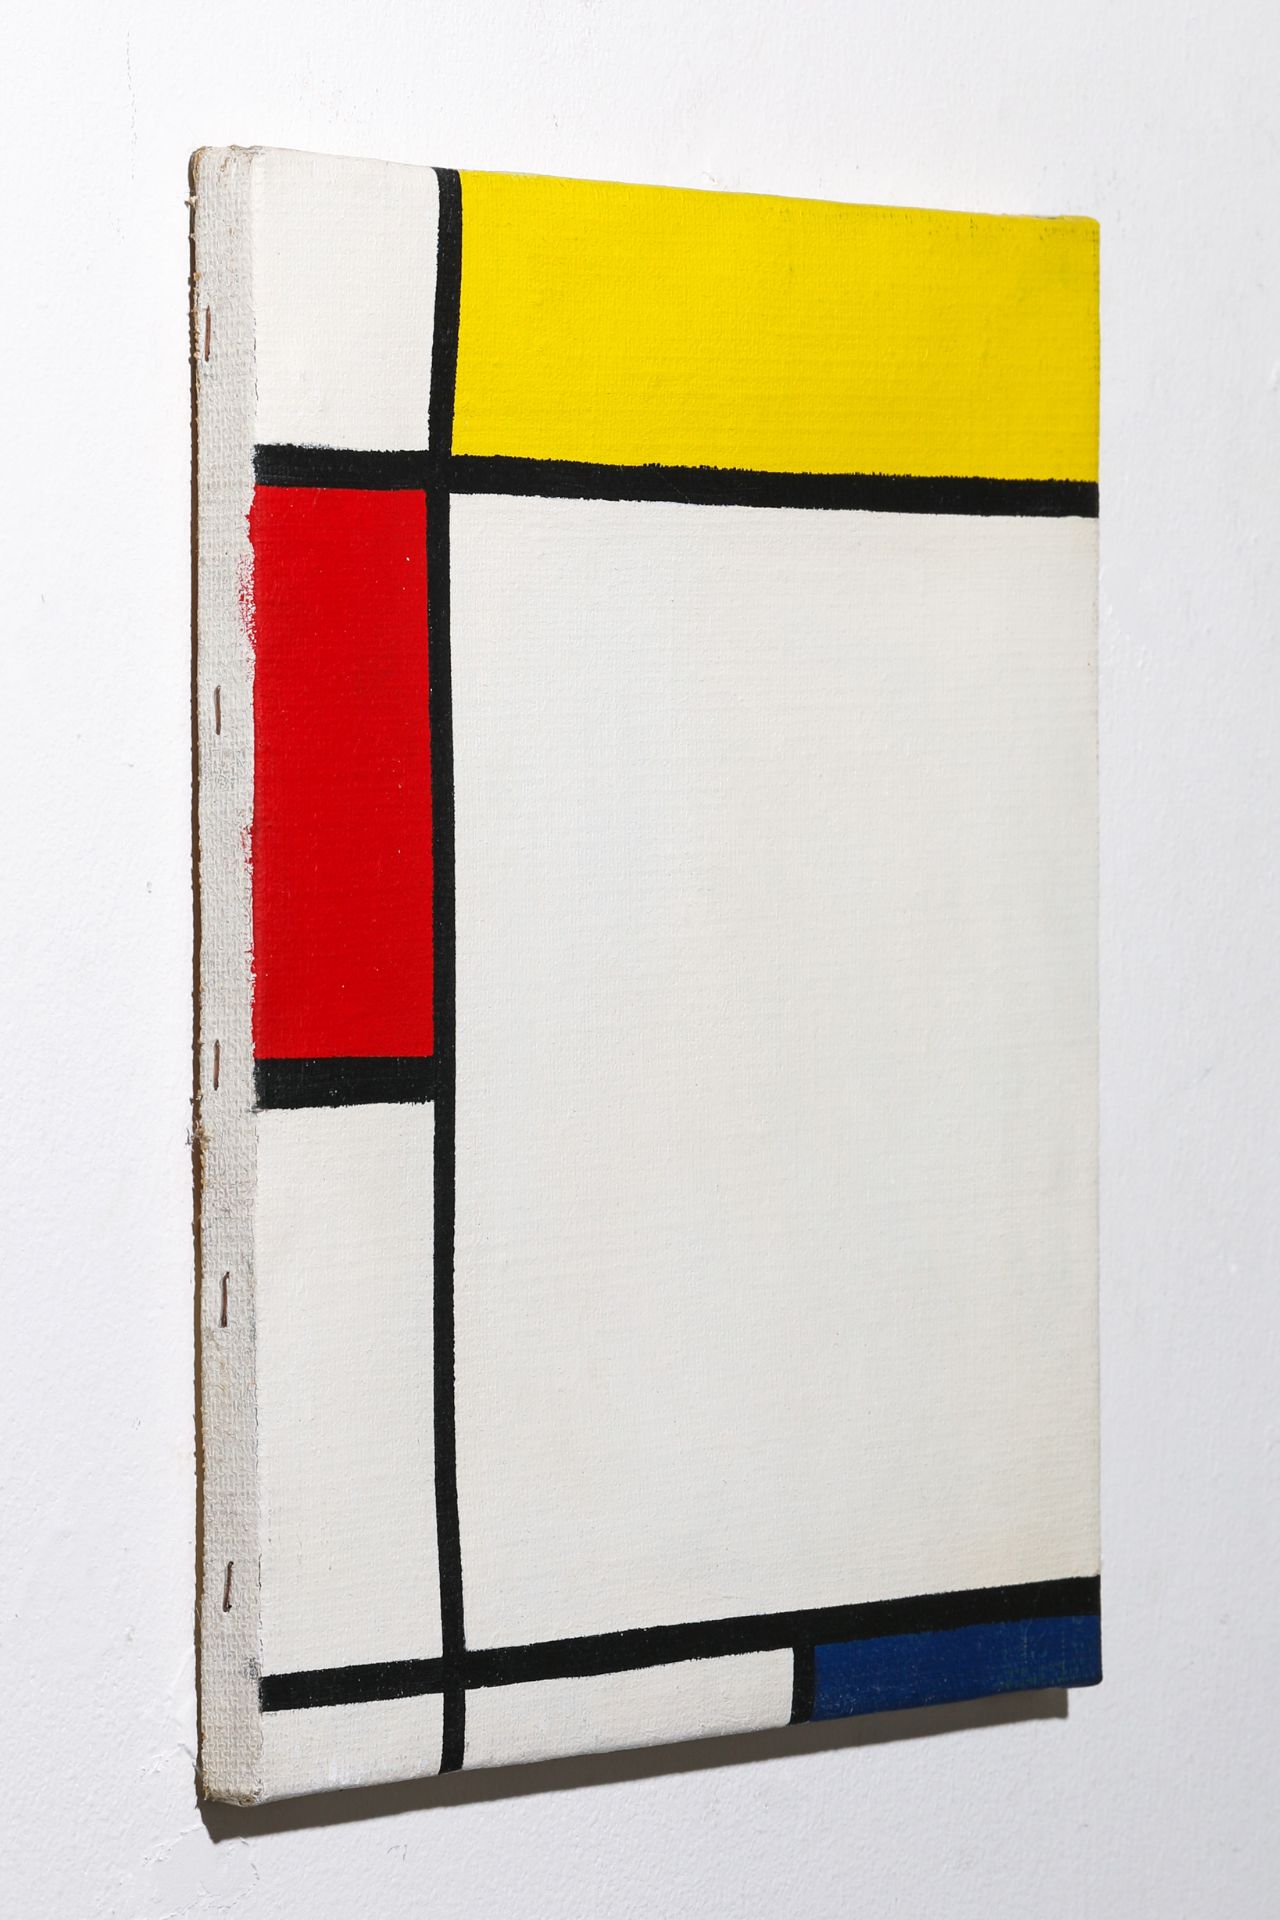 Andrea Branzi*, Studio Alchymia / Alchimia, Mondrian aus der bau. haus art collection Edition 2/10 - Bild 2 aus 5